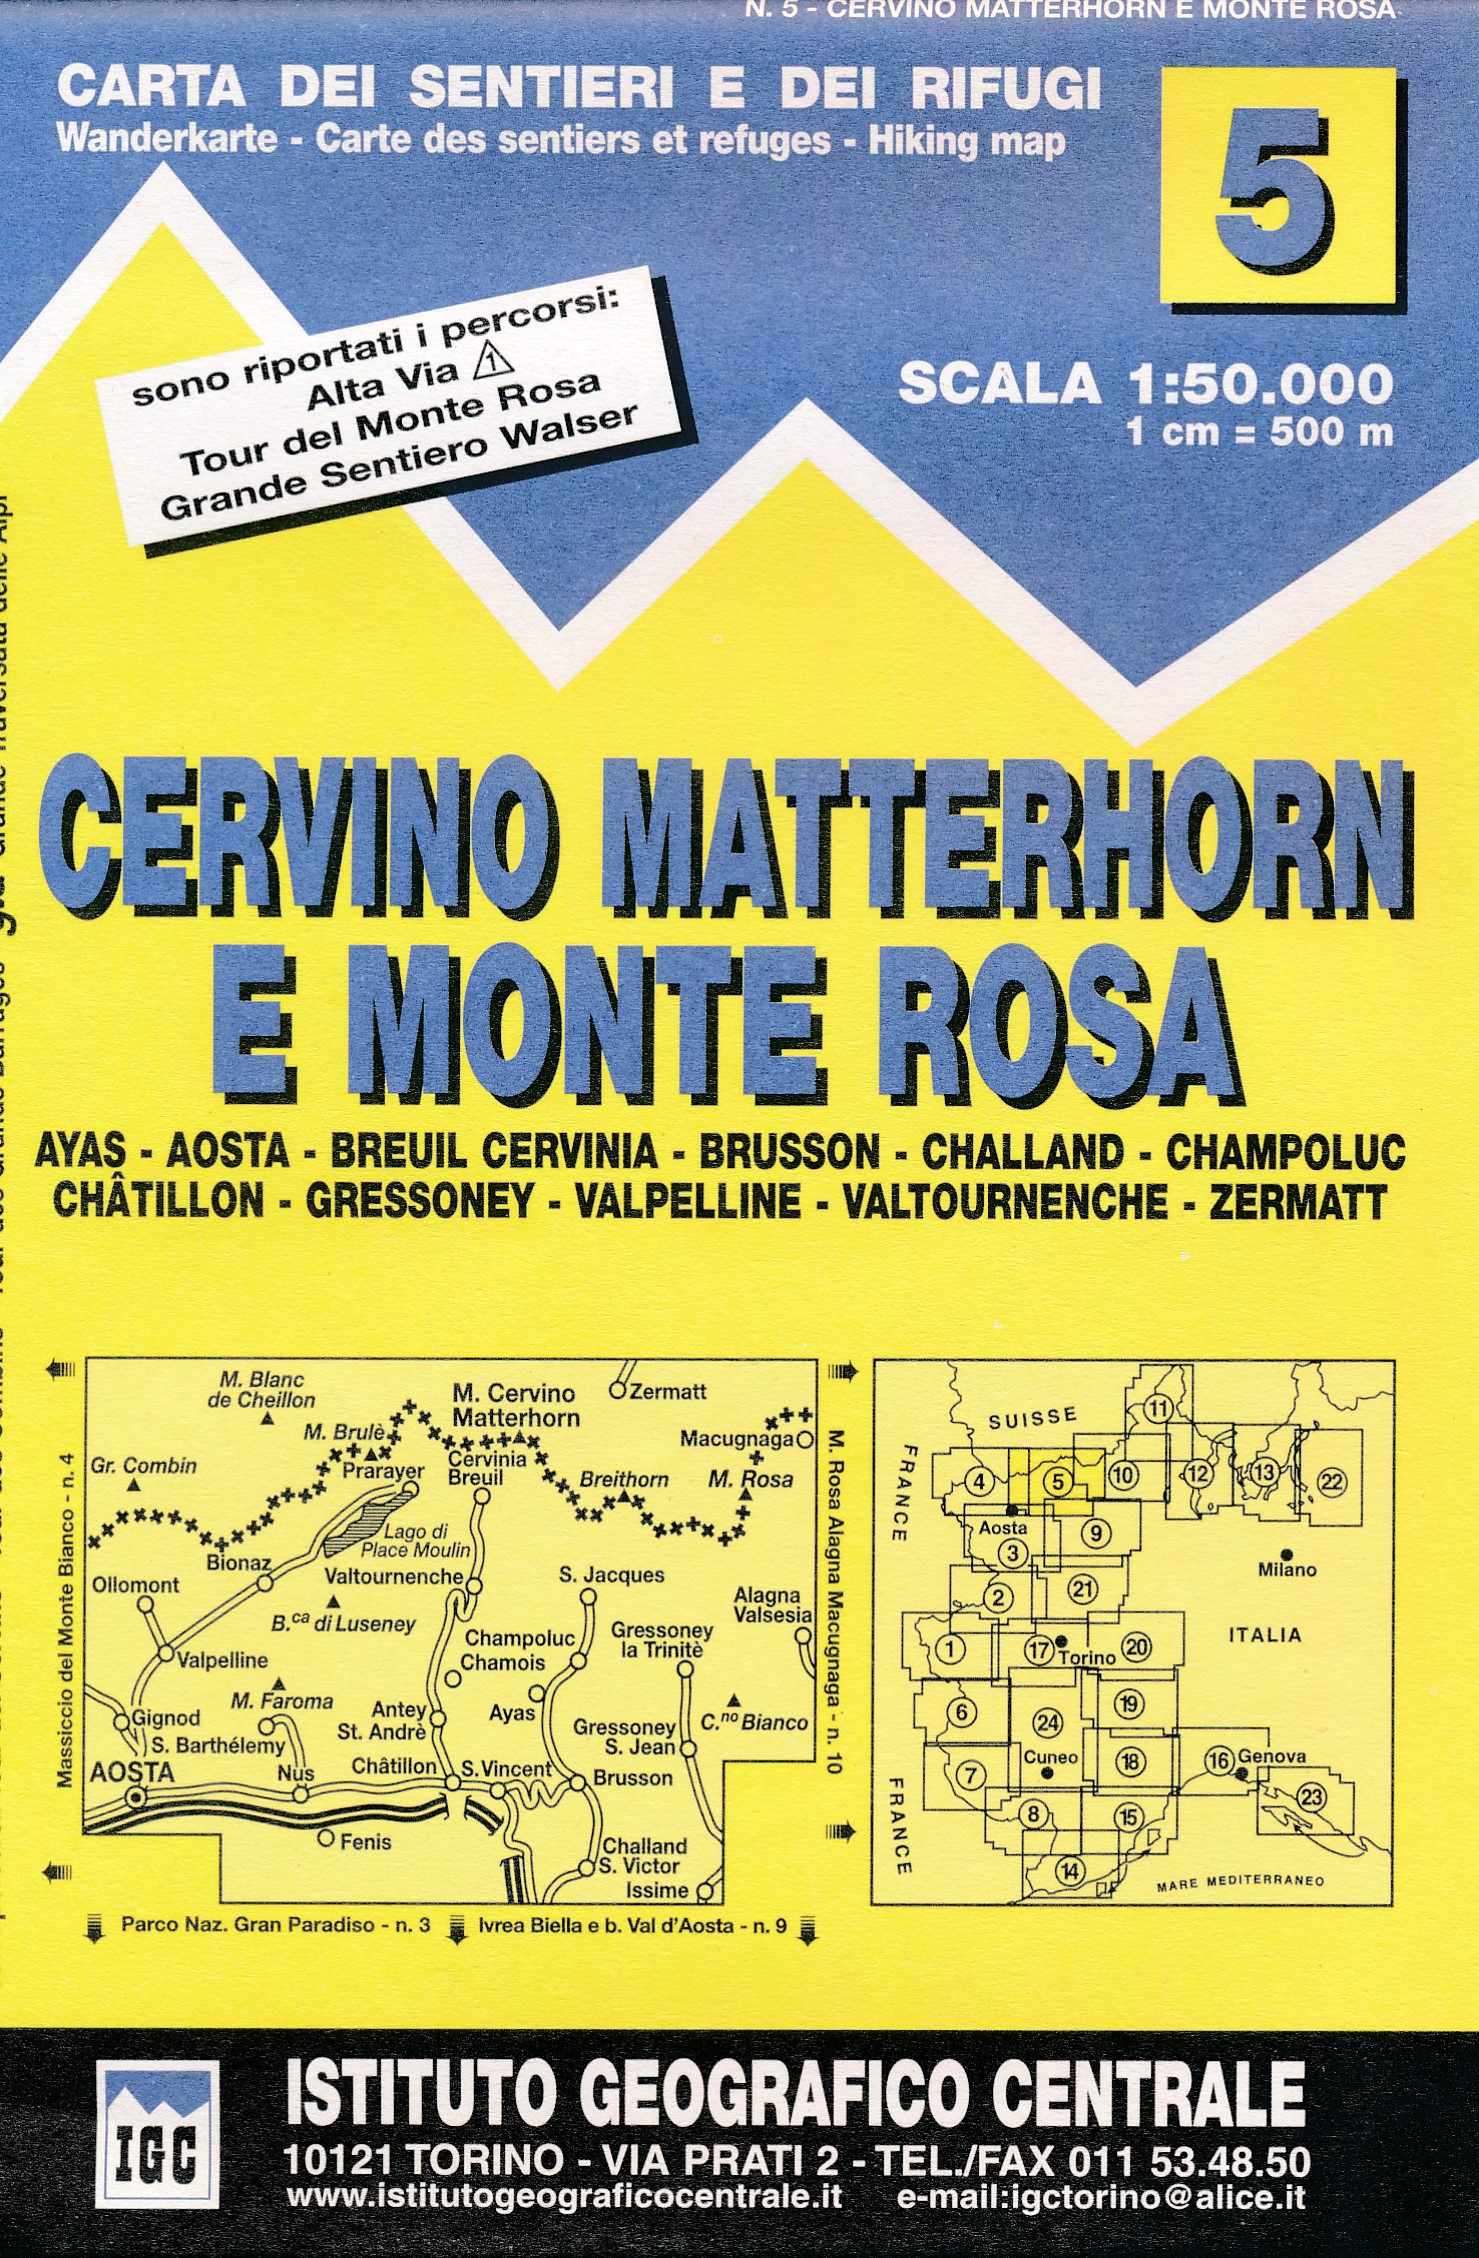 Online bestellen: Wandelkaart 05 Cervino Matterhorn e Monte Rosa | IGC - Istituto Geografico Centrale